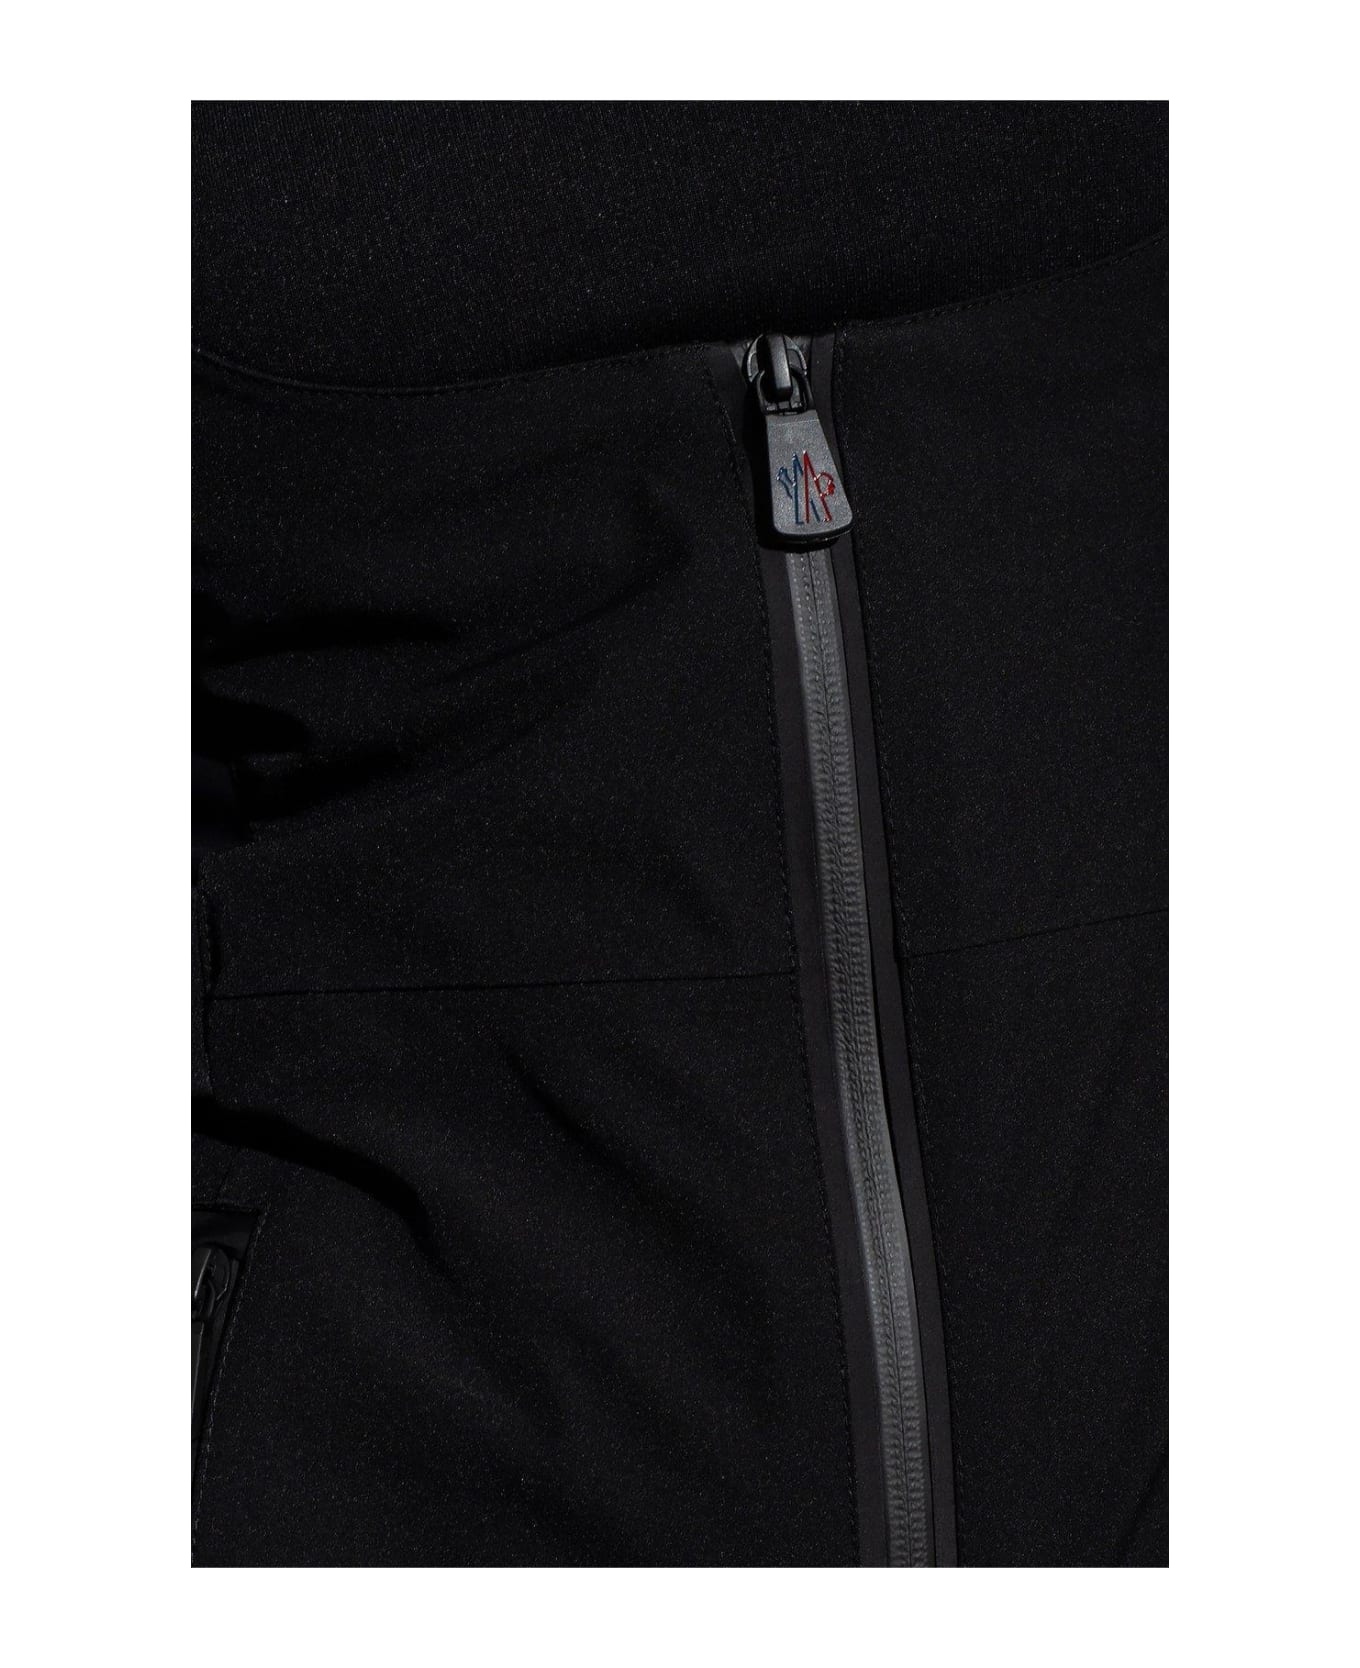 Moncler Grenoble Zipped Ski Suit - BLACK